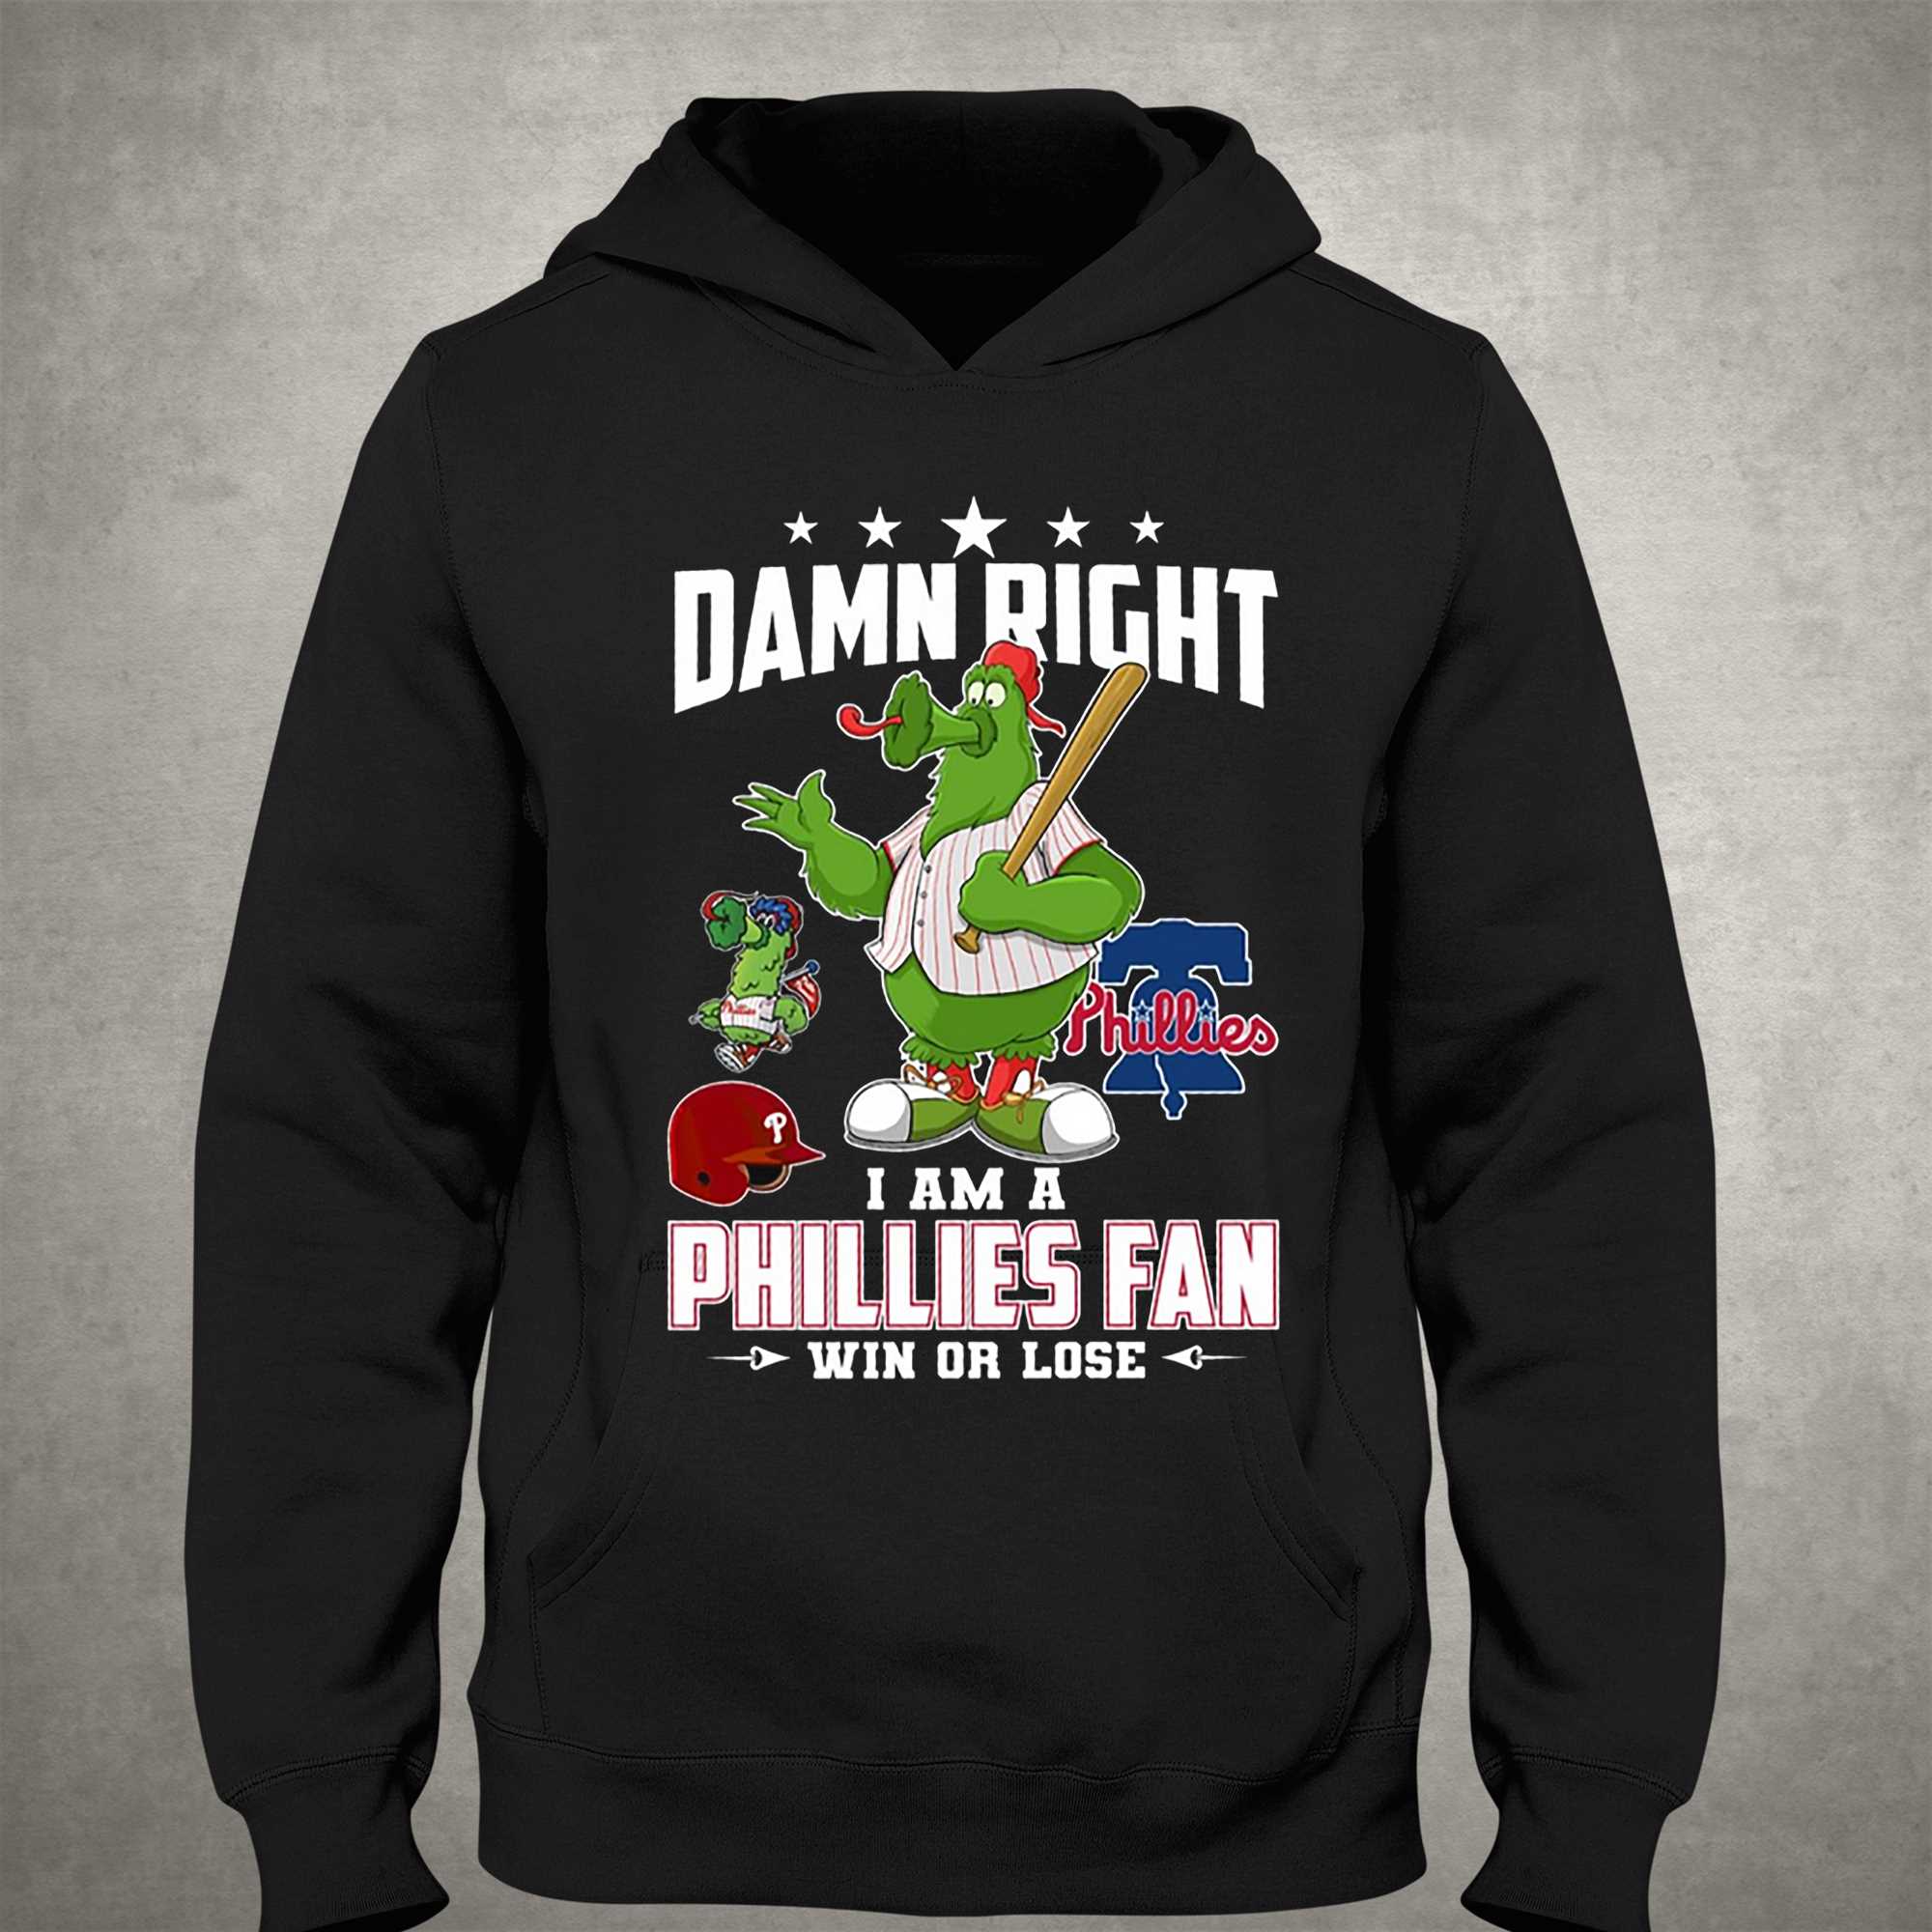 Damn Right I Am A Phillies Fan Win Or Lose T Shirt - TheKingShirtS